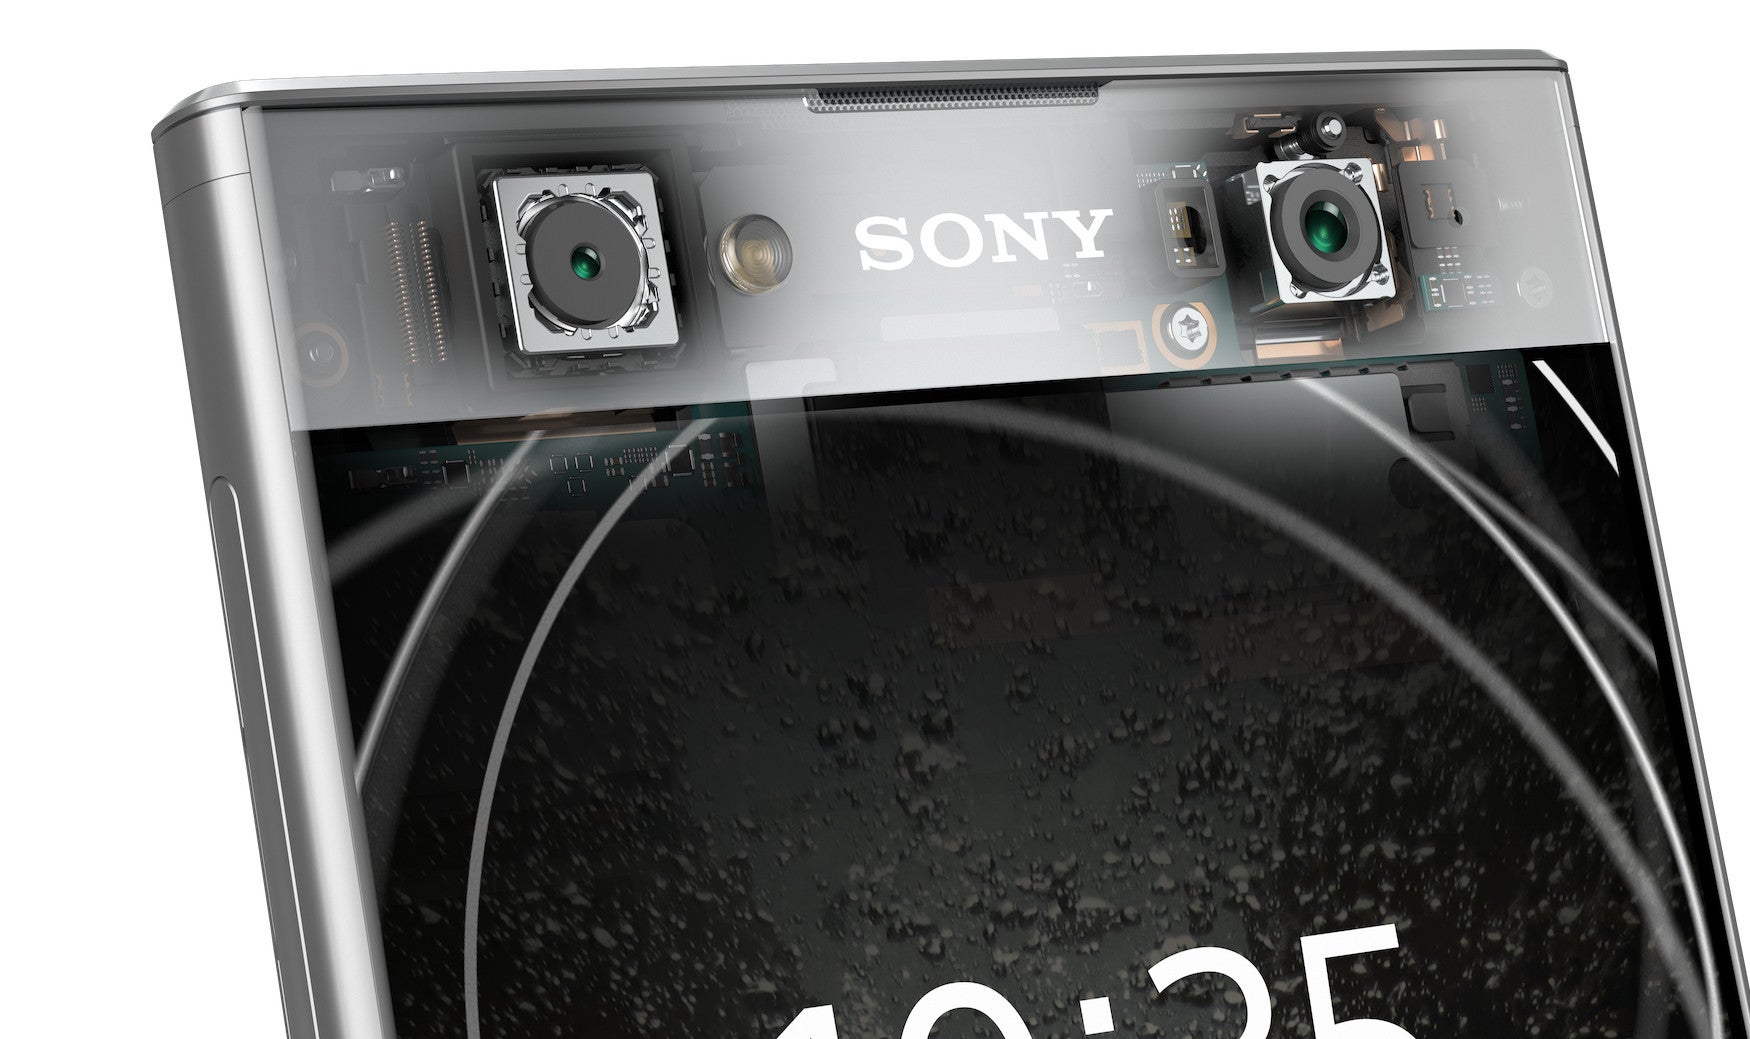 Traditions matter: Sony announces the Xperia XA2 and Xperia XA2 Ultra